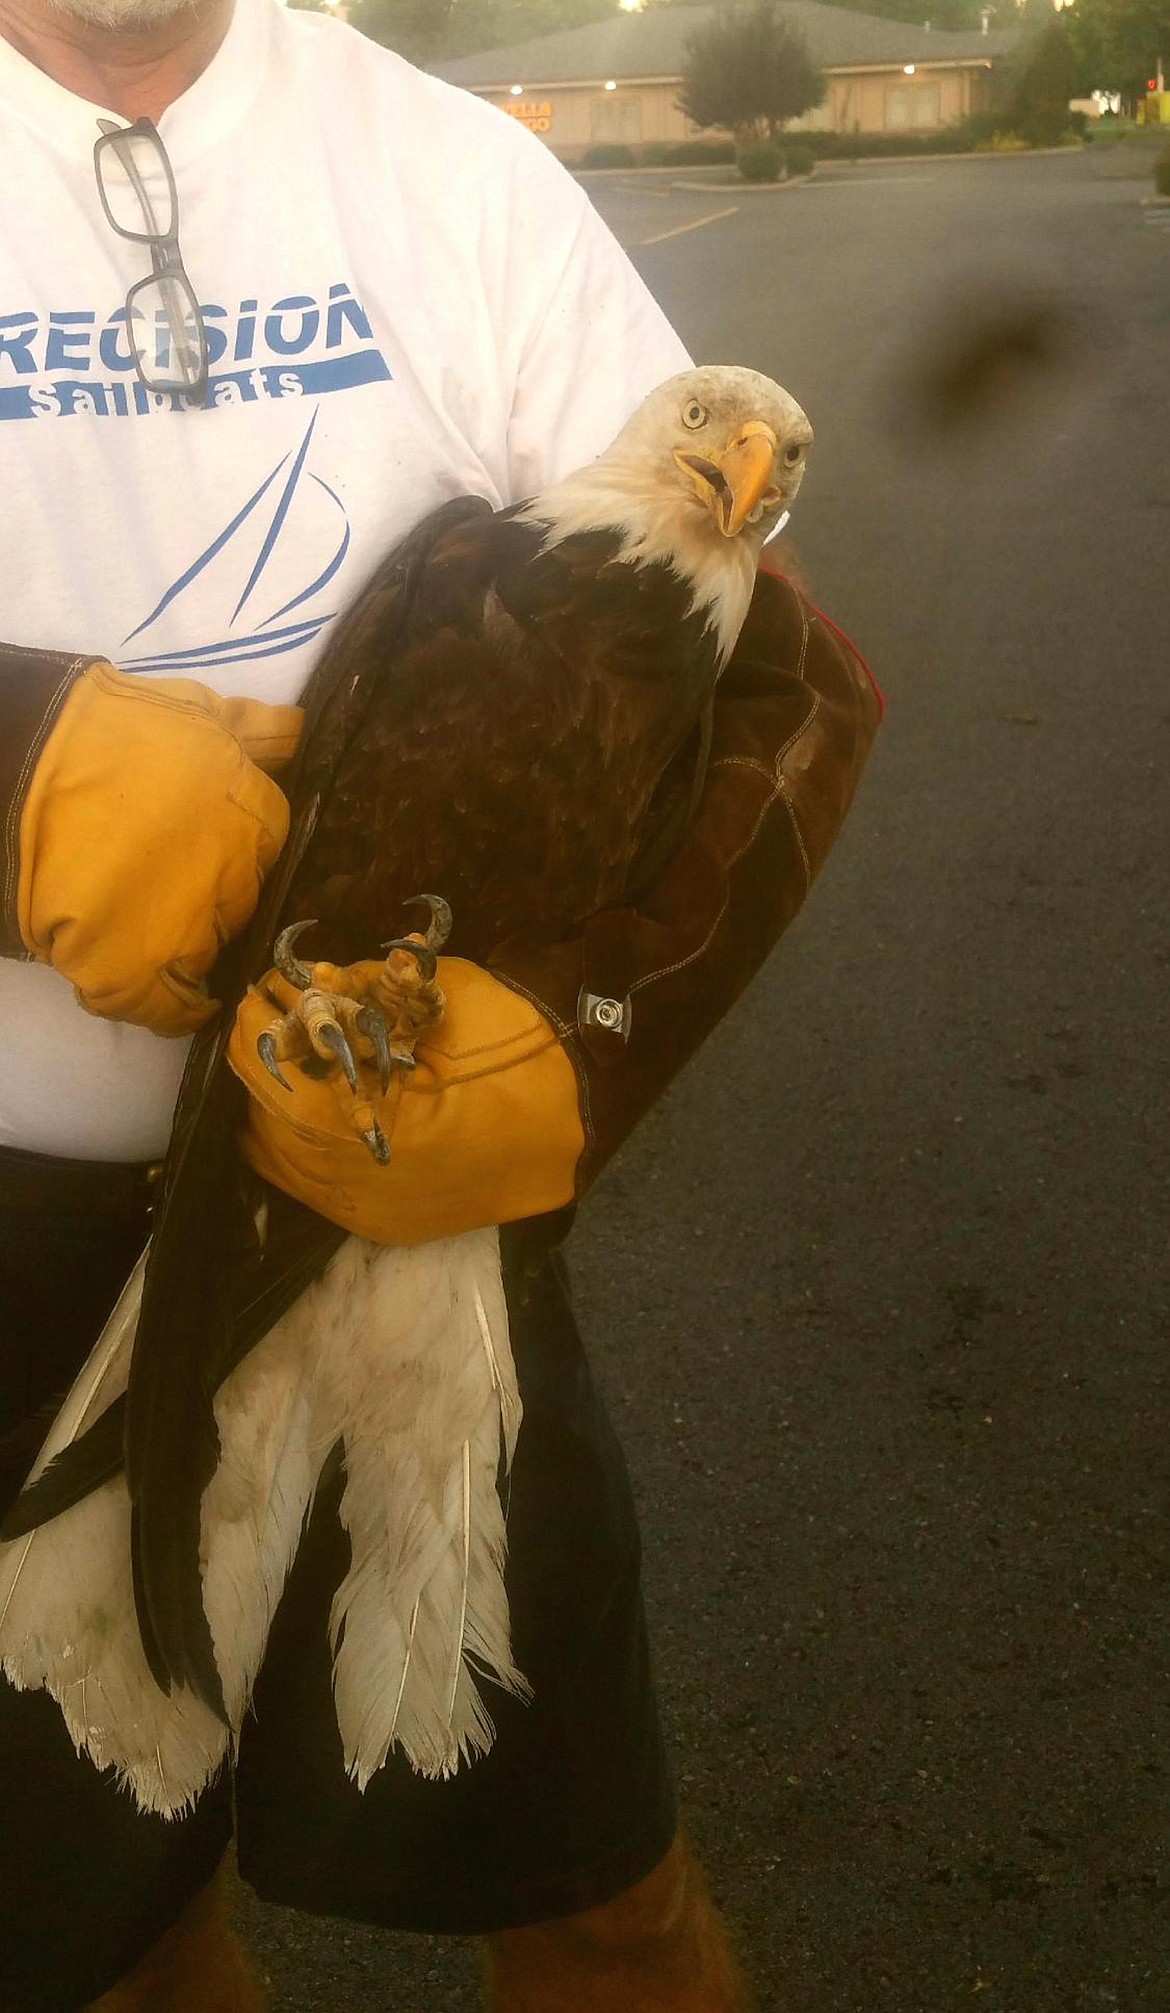 &#151;Photo courtesy LAURA JONES
A closeup of the injured eagle.